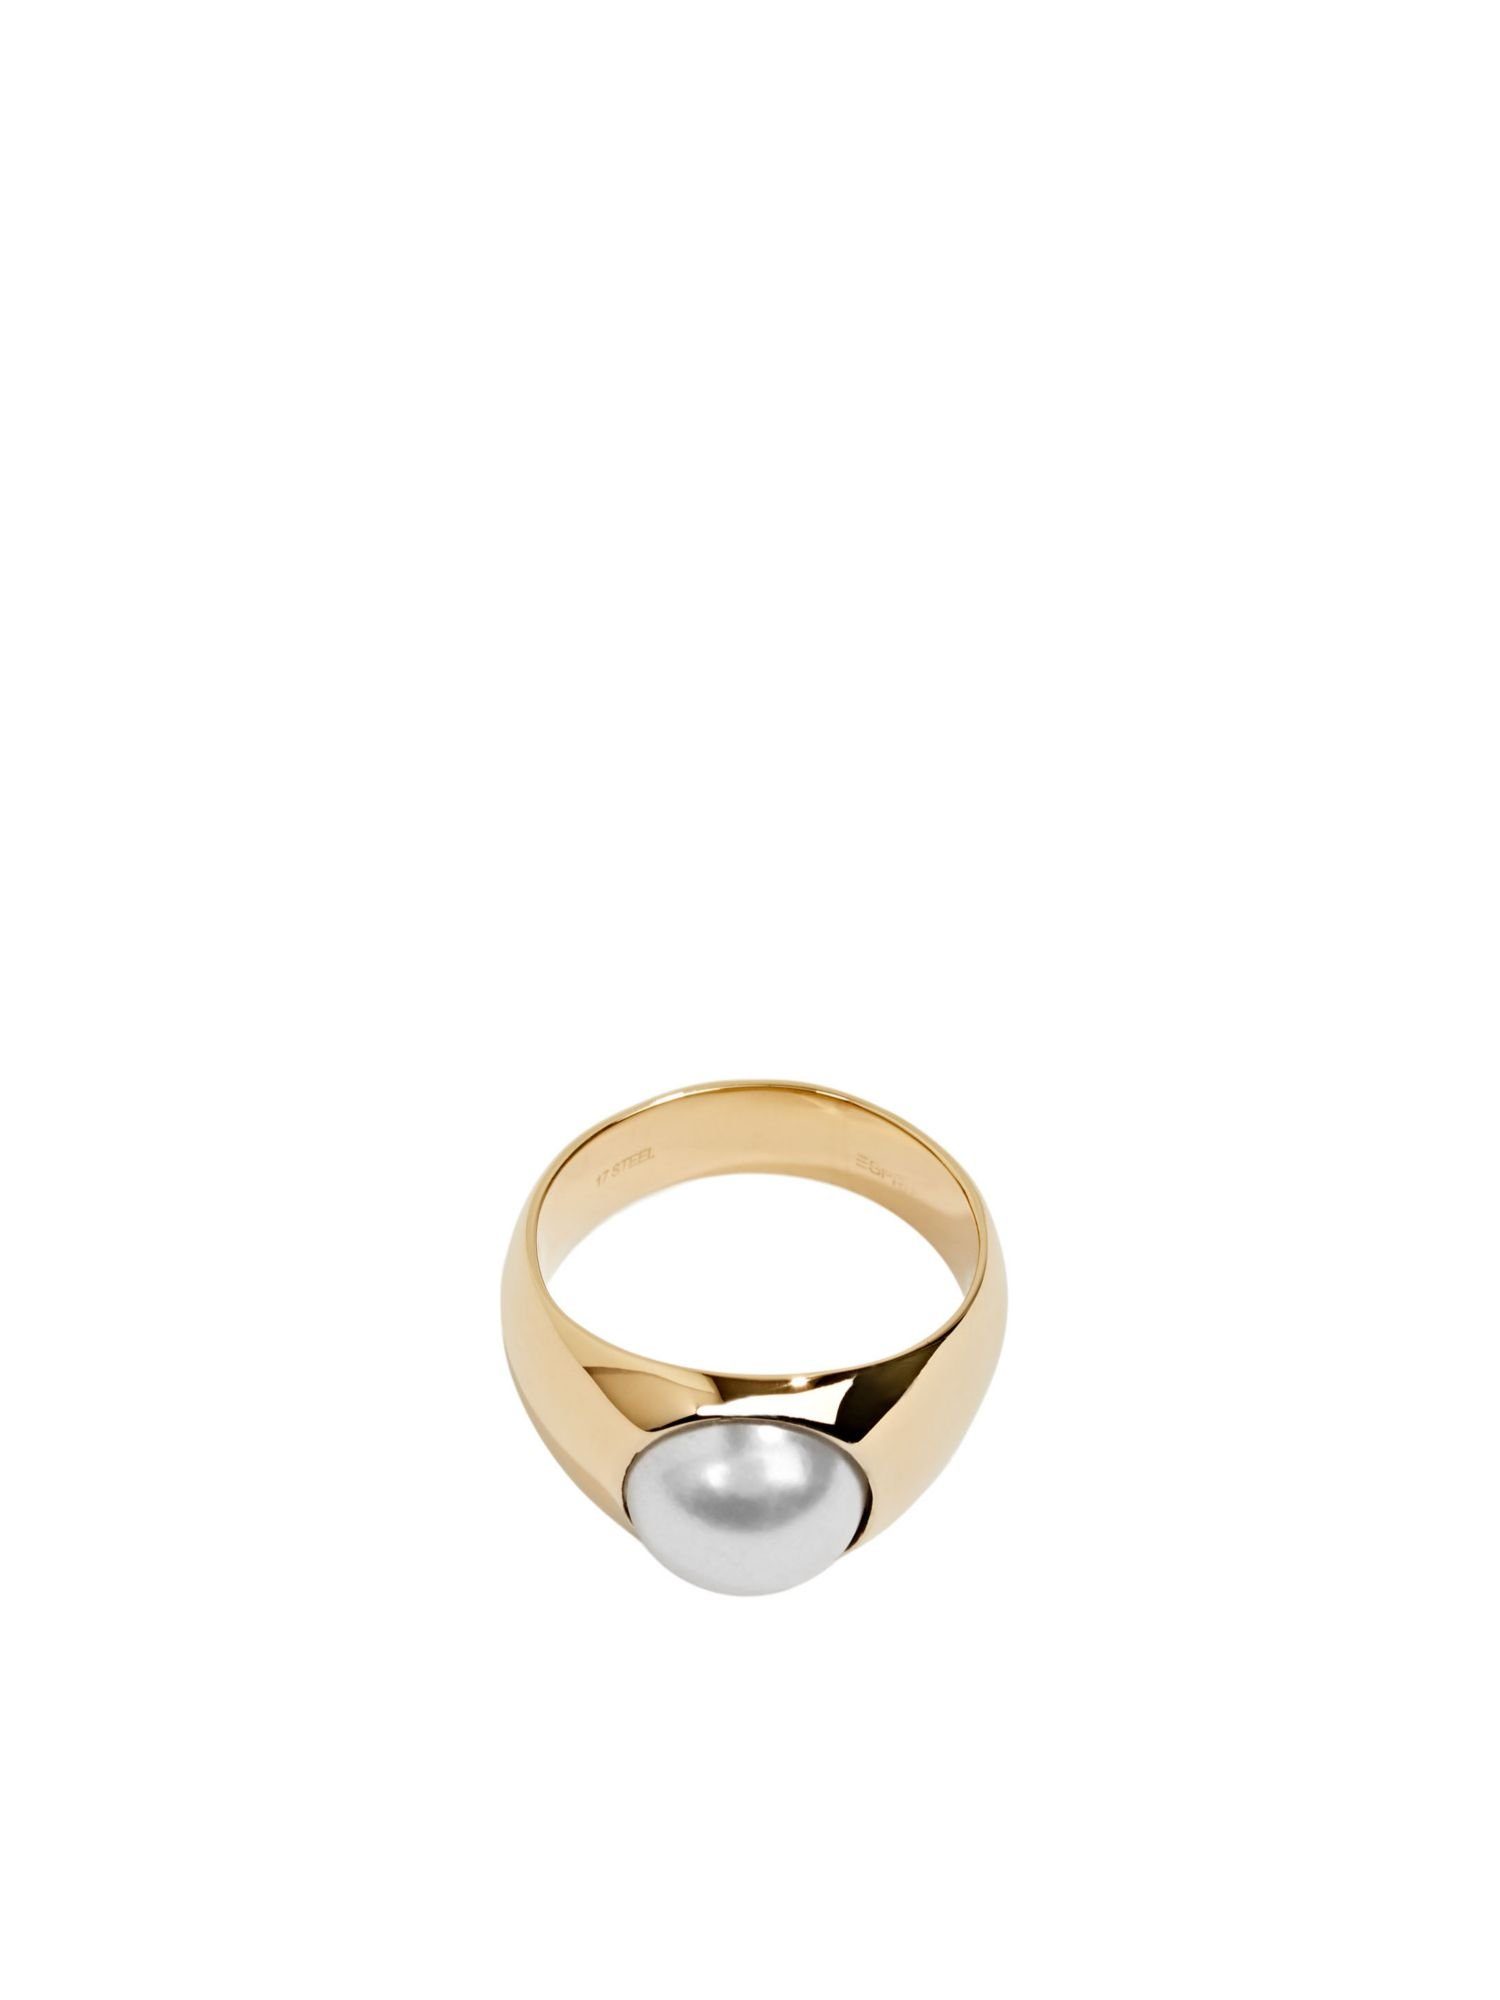 Damen Schmuck Esprit Fingerring Ring mit Perle, Edelstahl